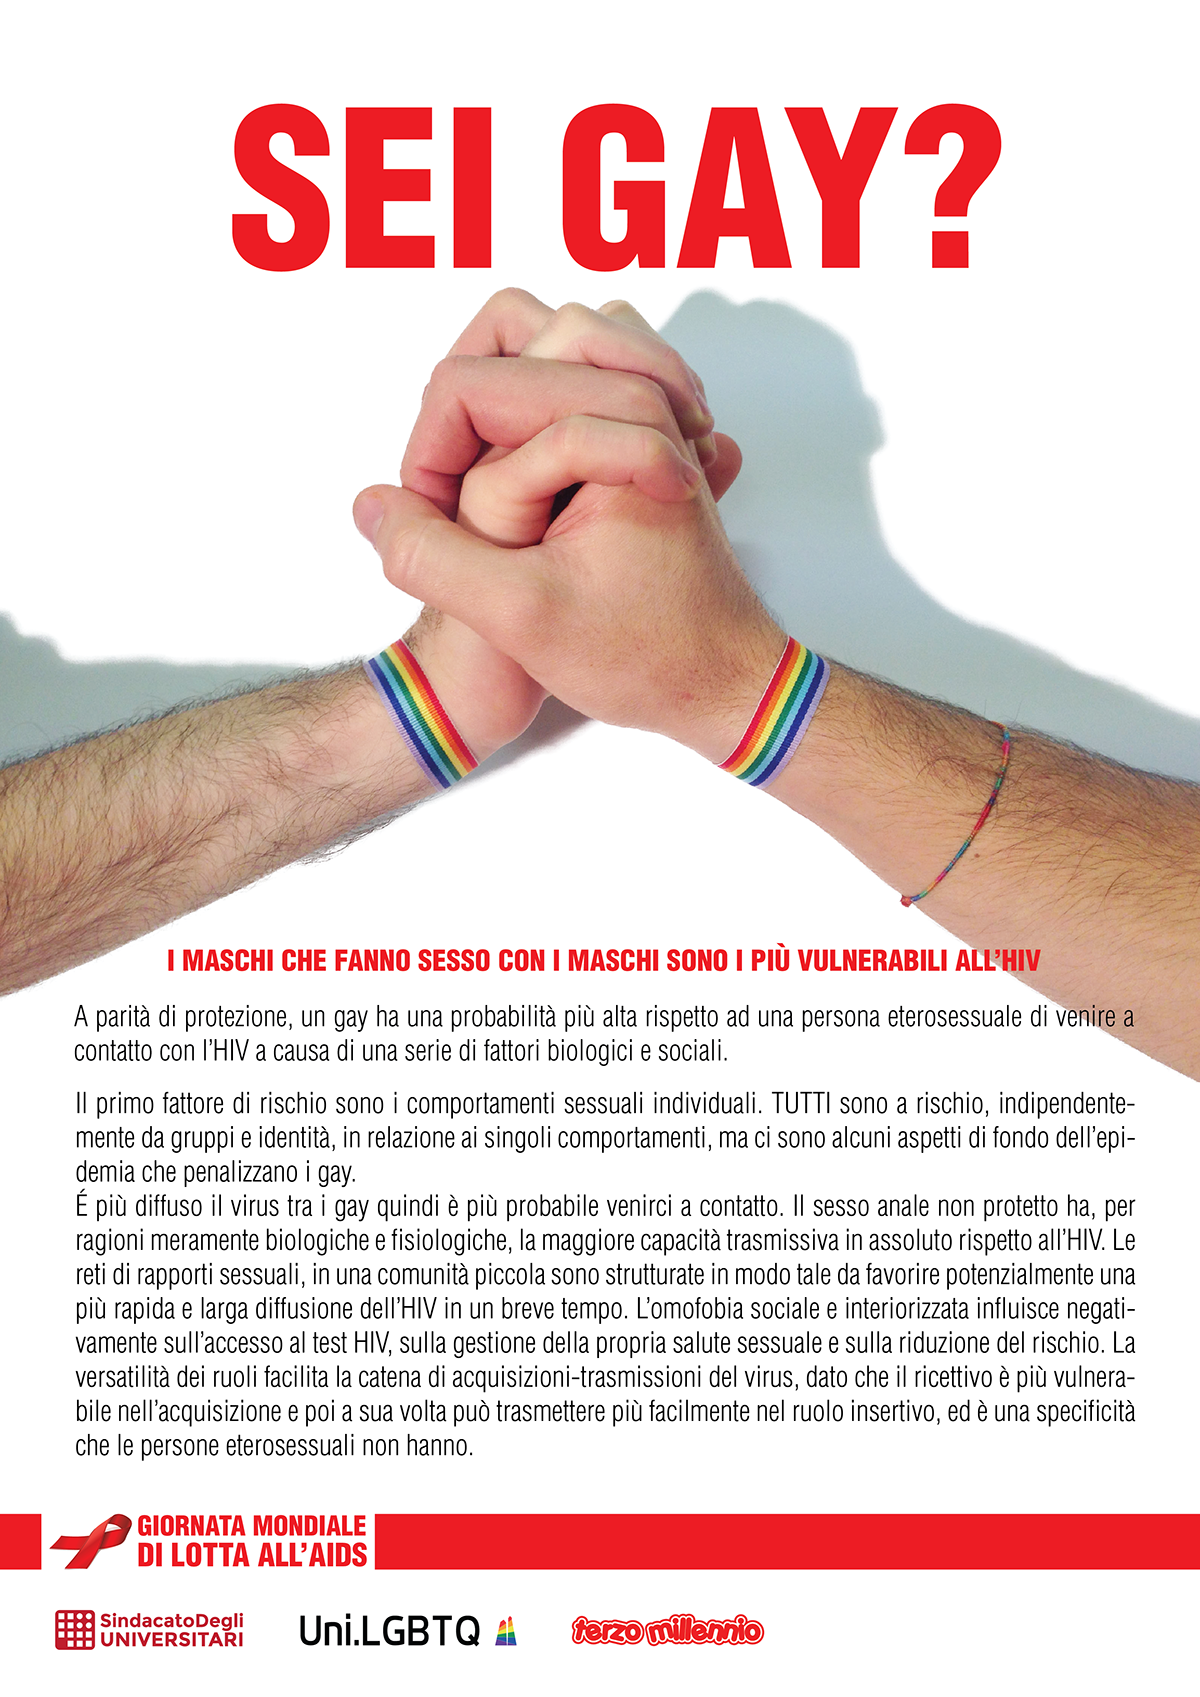 gay MSM LGBT LGBTQ Students University AIDS hiv CONDOM LUB sex safersex safe healt